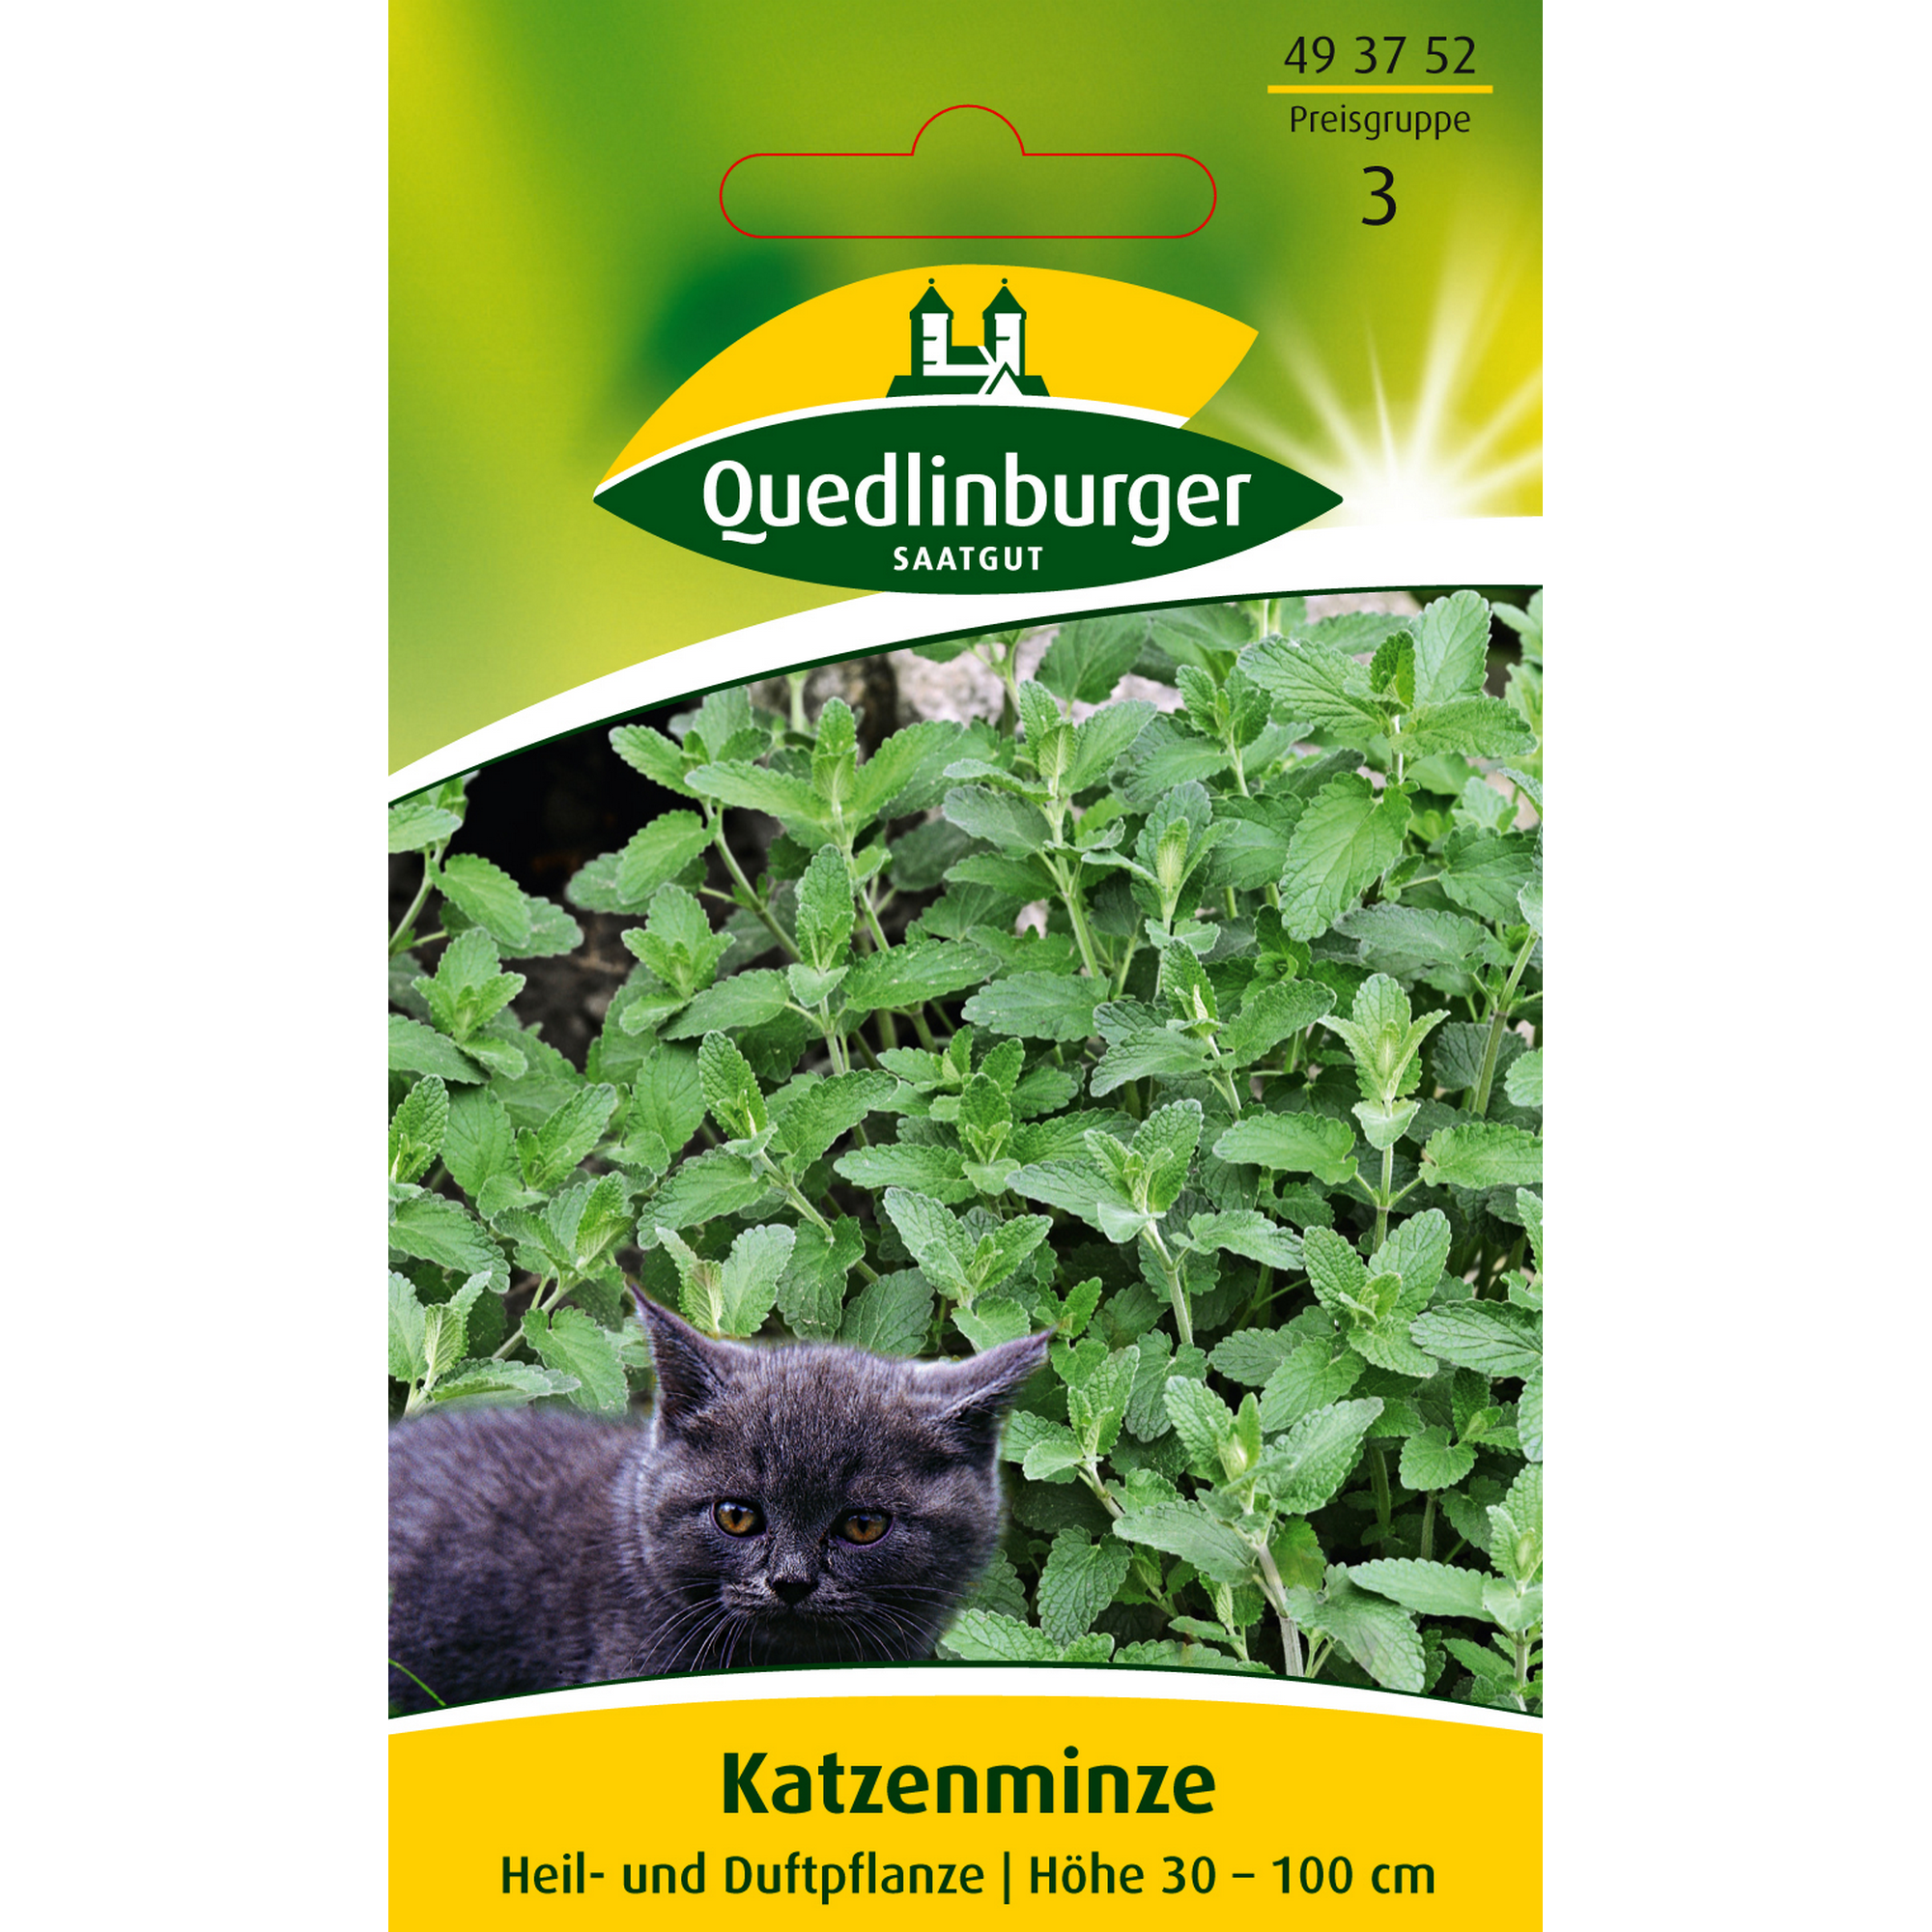 Katzenminze + product picture